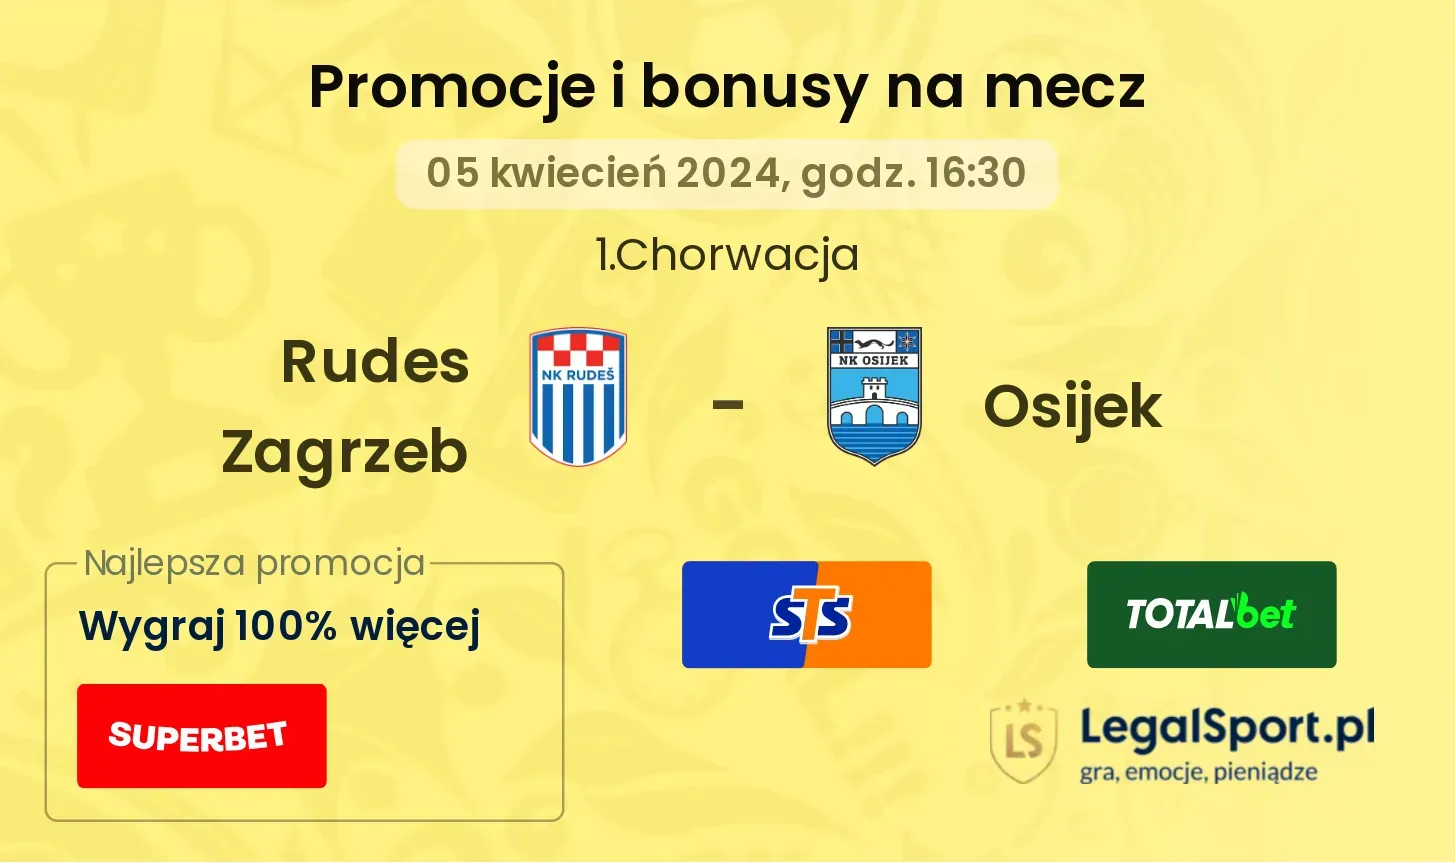 Rudes Zagrzeb - Osijek promocje bonusy na mecz